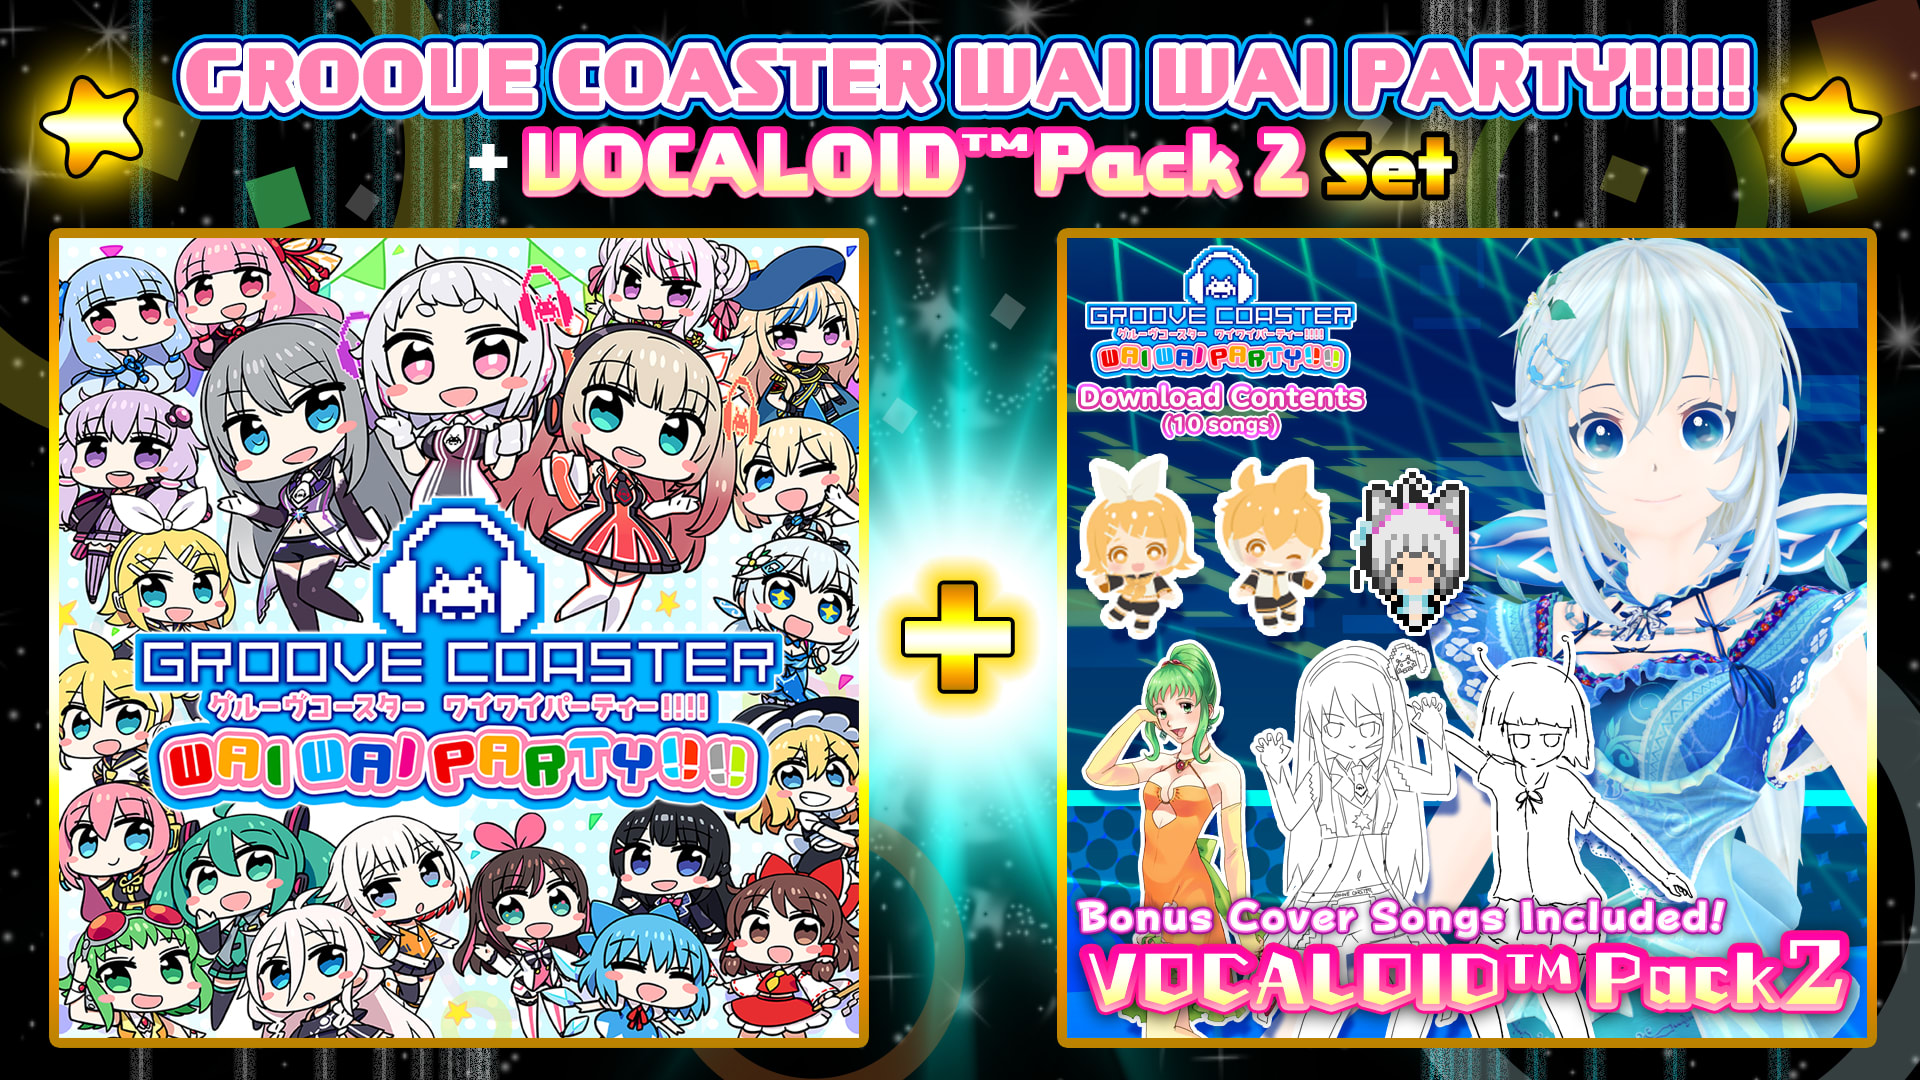 GROOVE COASTER WAI WAI PARTY!!!! + VOCALOID Pack 2 Value bundle